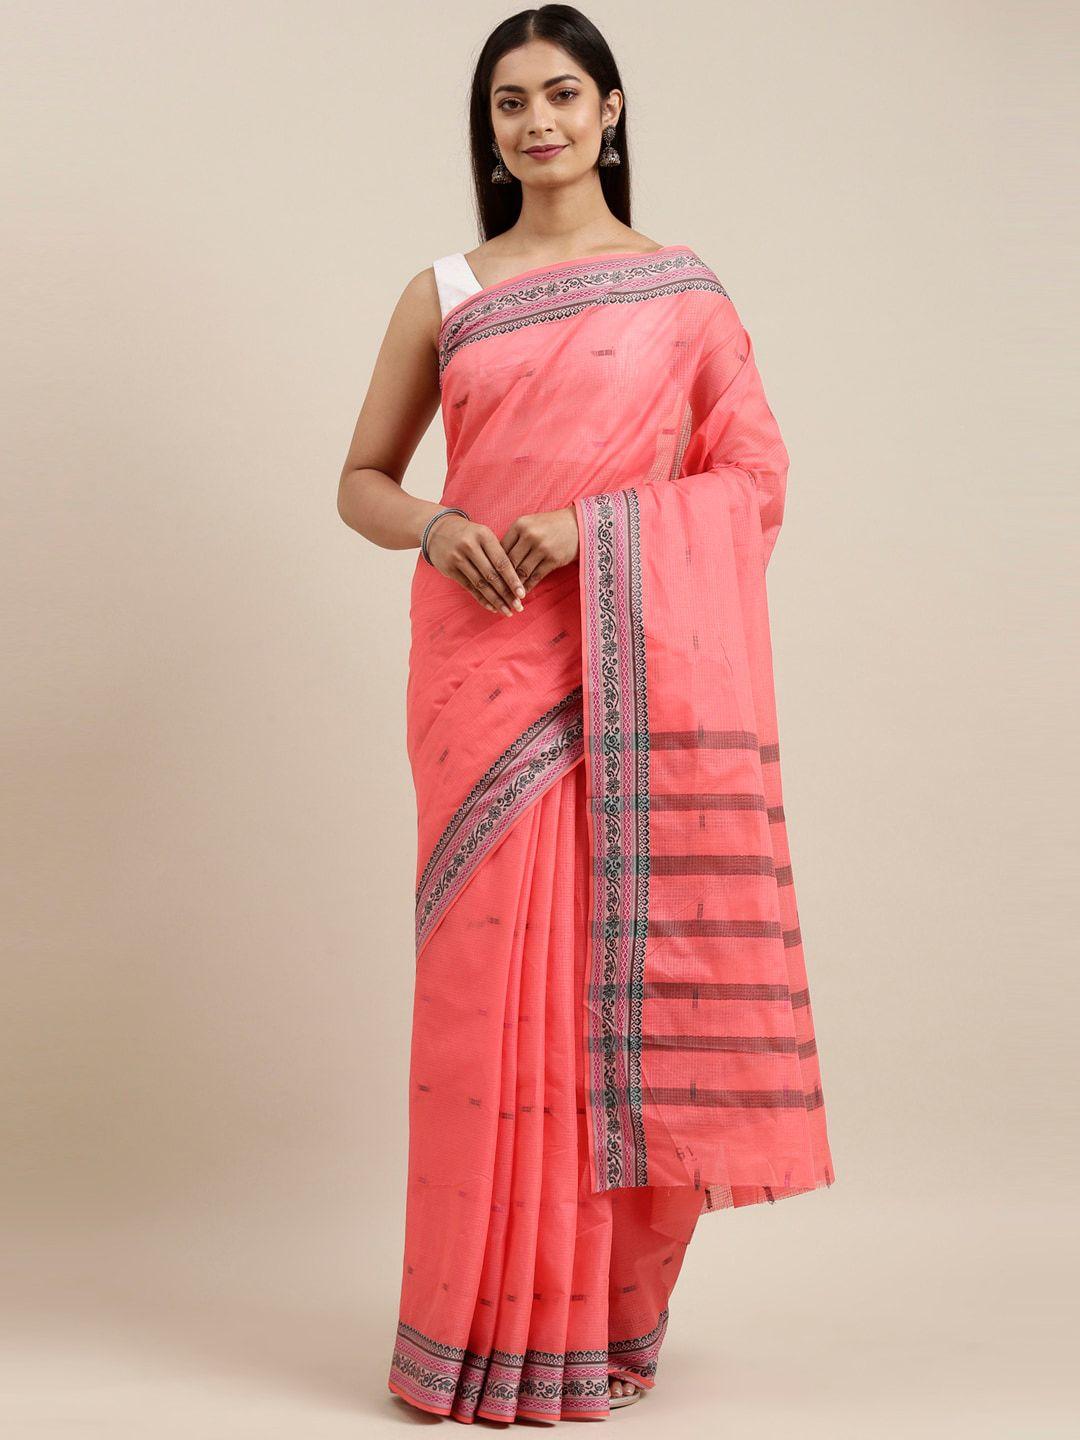 the chennai silks pink & black ethnic motifs pure cotton saree